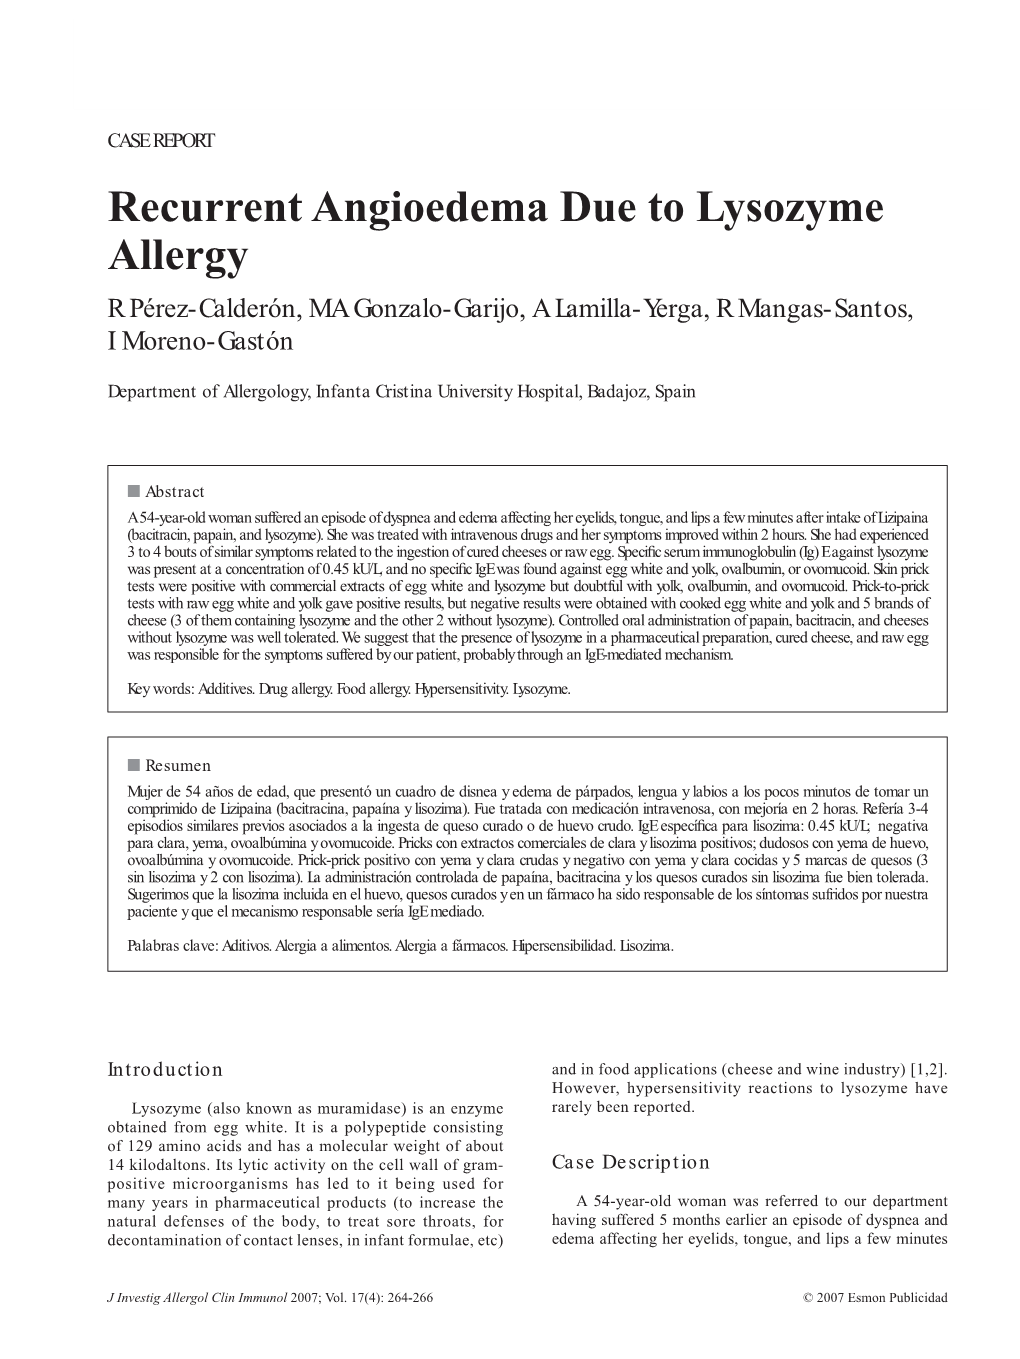 Recurrent Angioedema Due to Lysozyme Allergy R Pérez-Calderón, MA Gonzalo-Garijo, a Lamilla-Yerga, R Mangas-Santos, I Moreno-Gastón